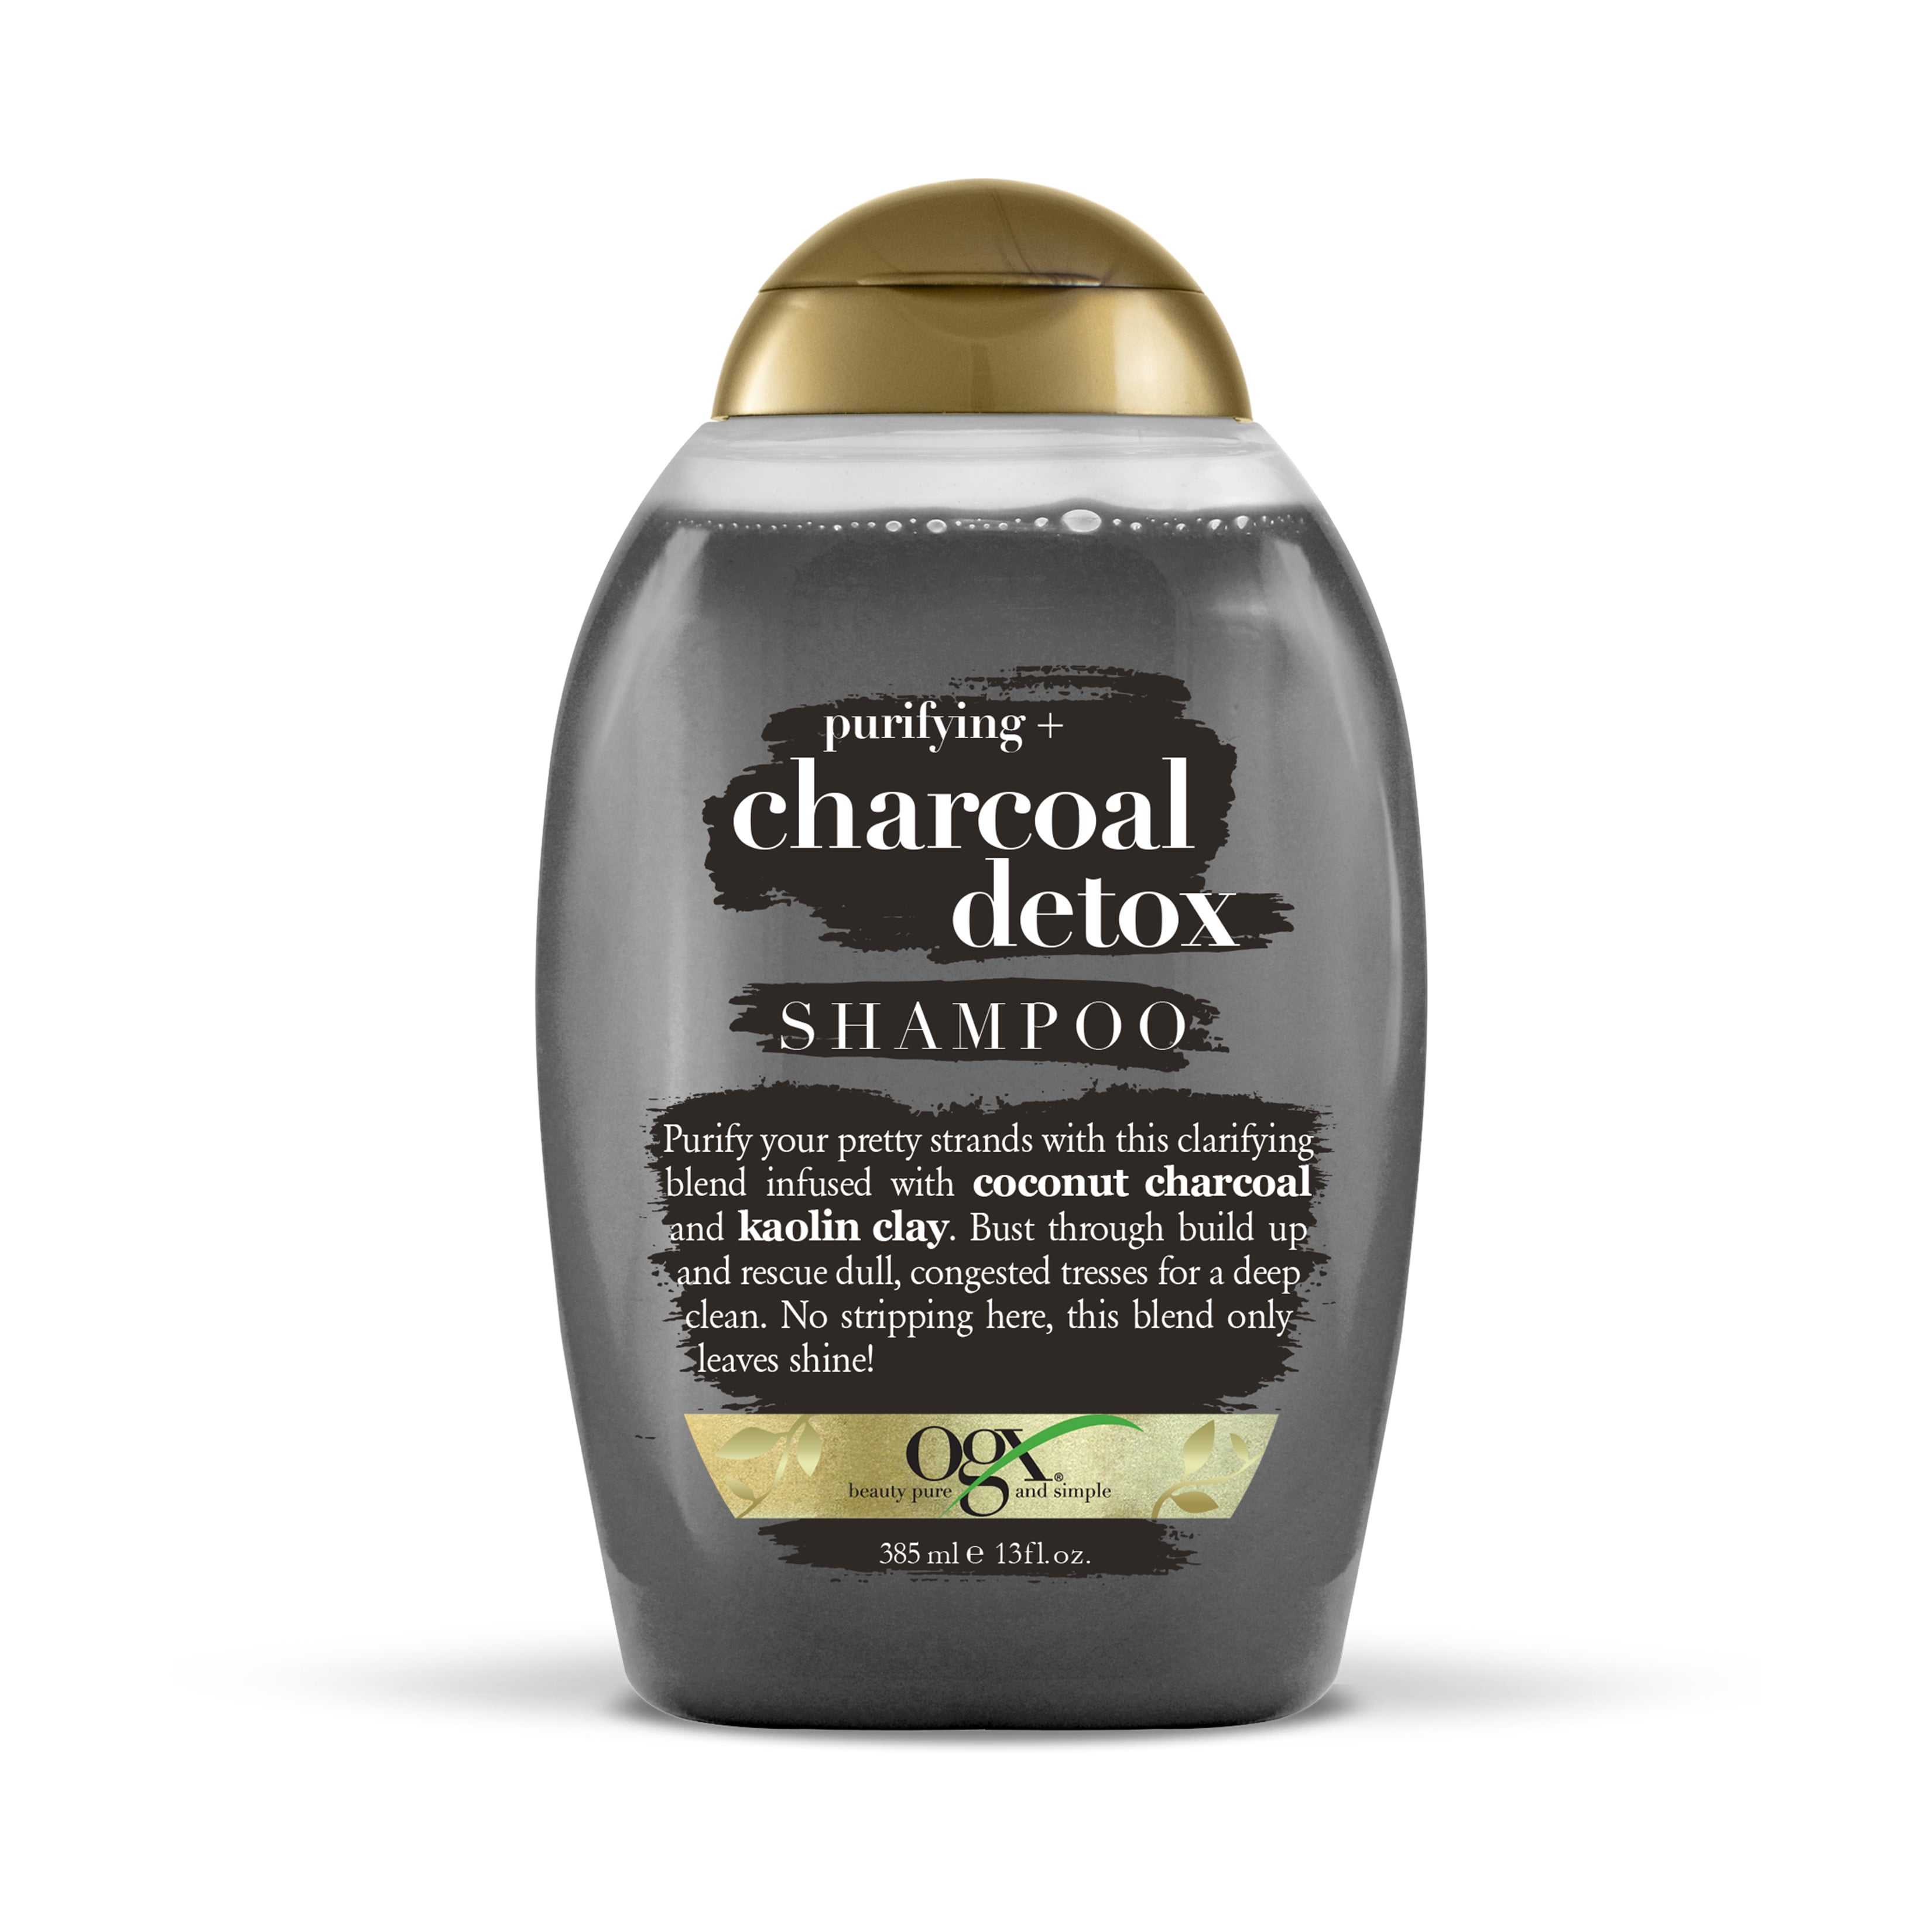 Sulfates, Buildup Nourishment, Fl Detox for + Light Purifying Oz OGX Removal and Shampoo No Charcoal 13